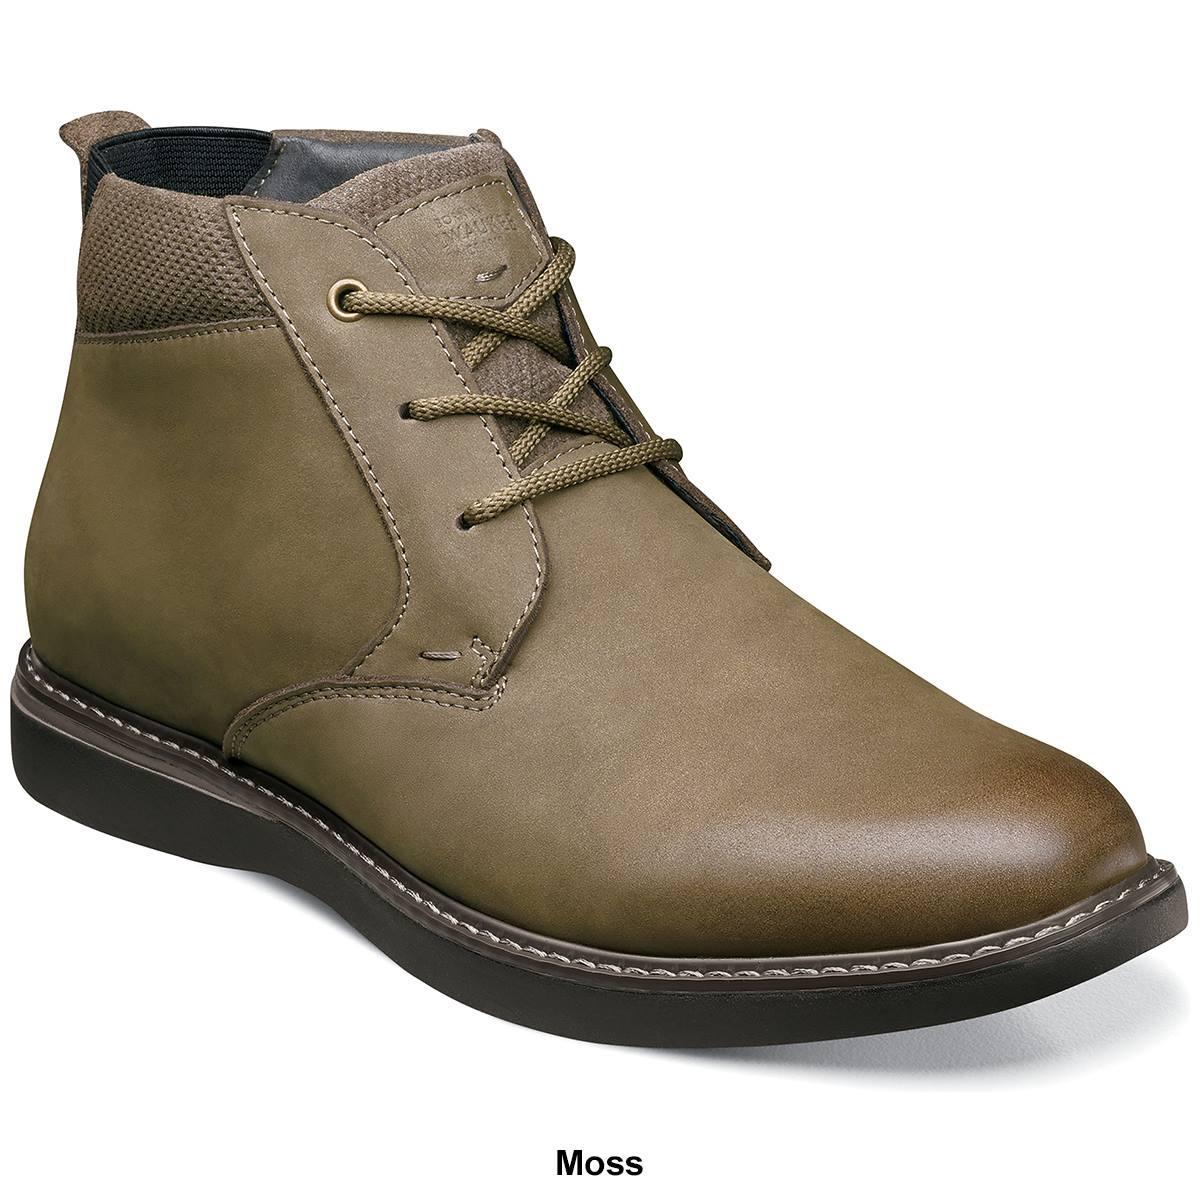 Nunn Bush Shoes Bayridge Plain Toe Chukka Moss Product Image